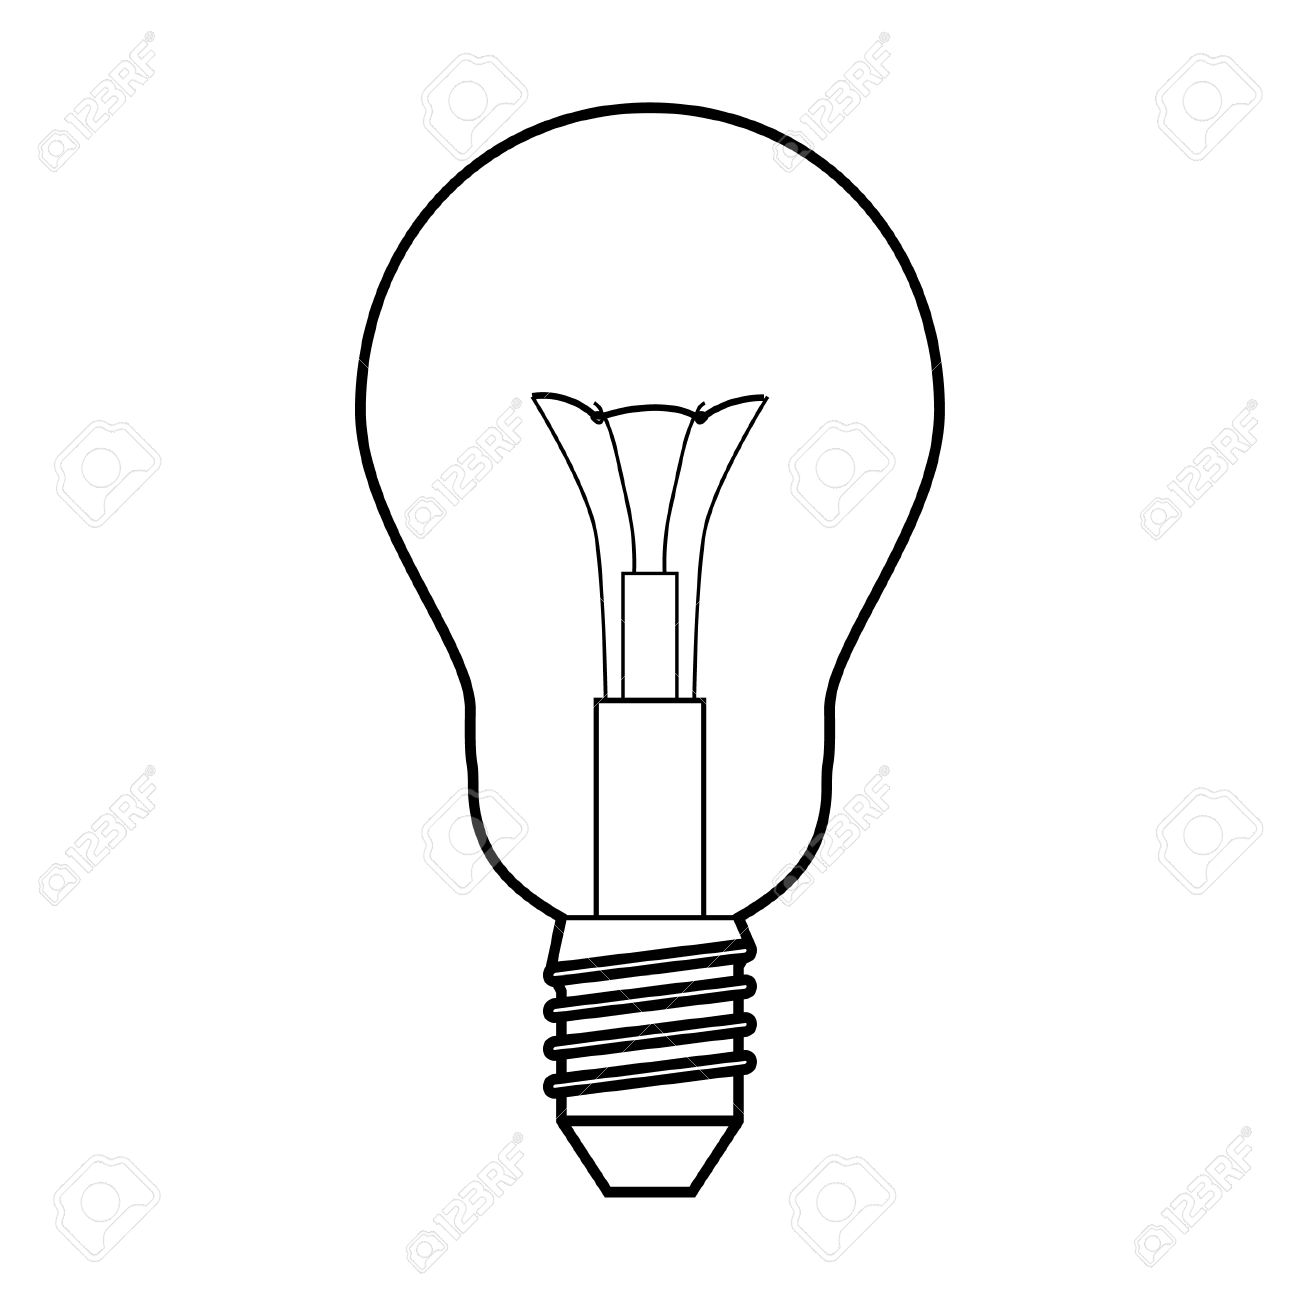 Light bulb drawing.